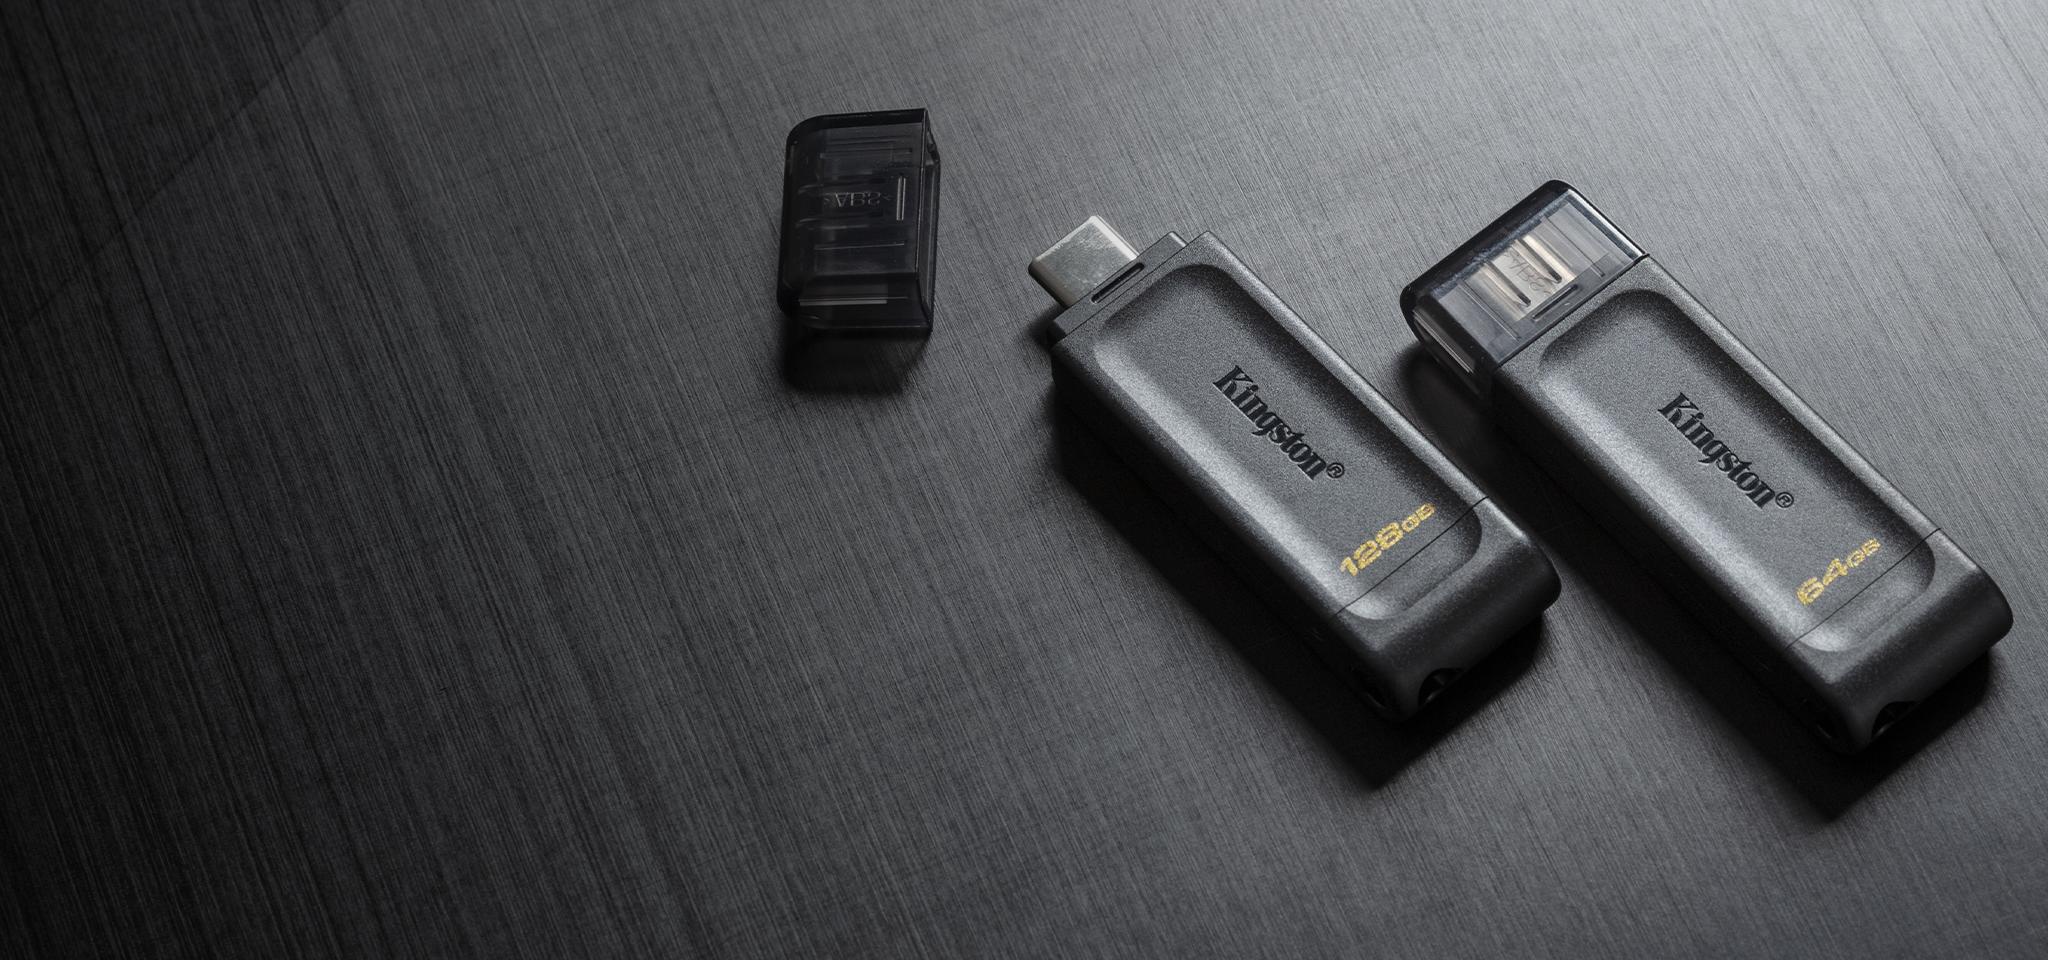 DataTraveler 70  Drive Flash USB-C